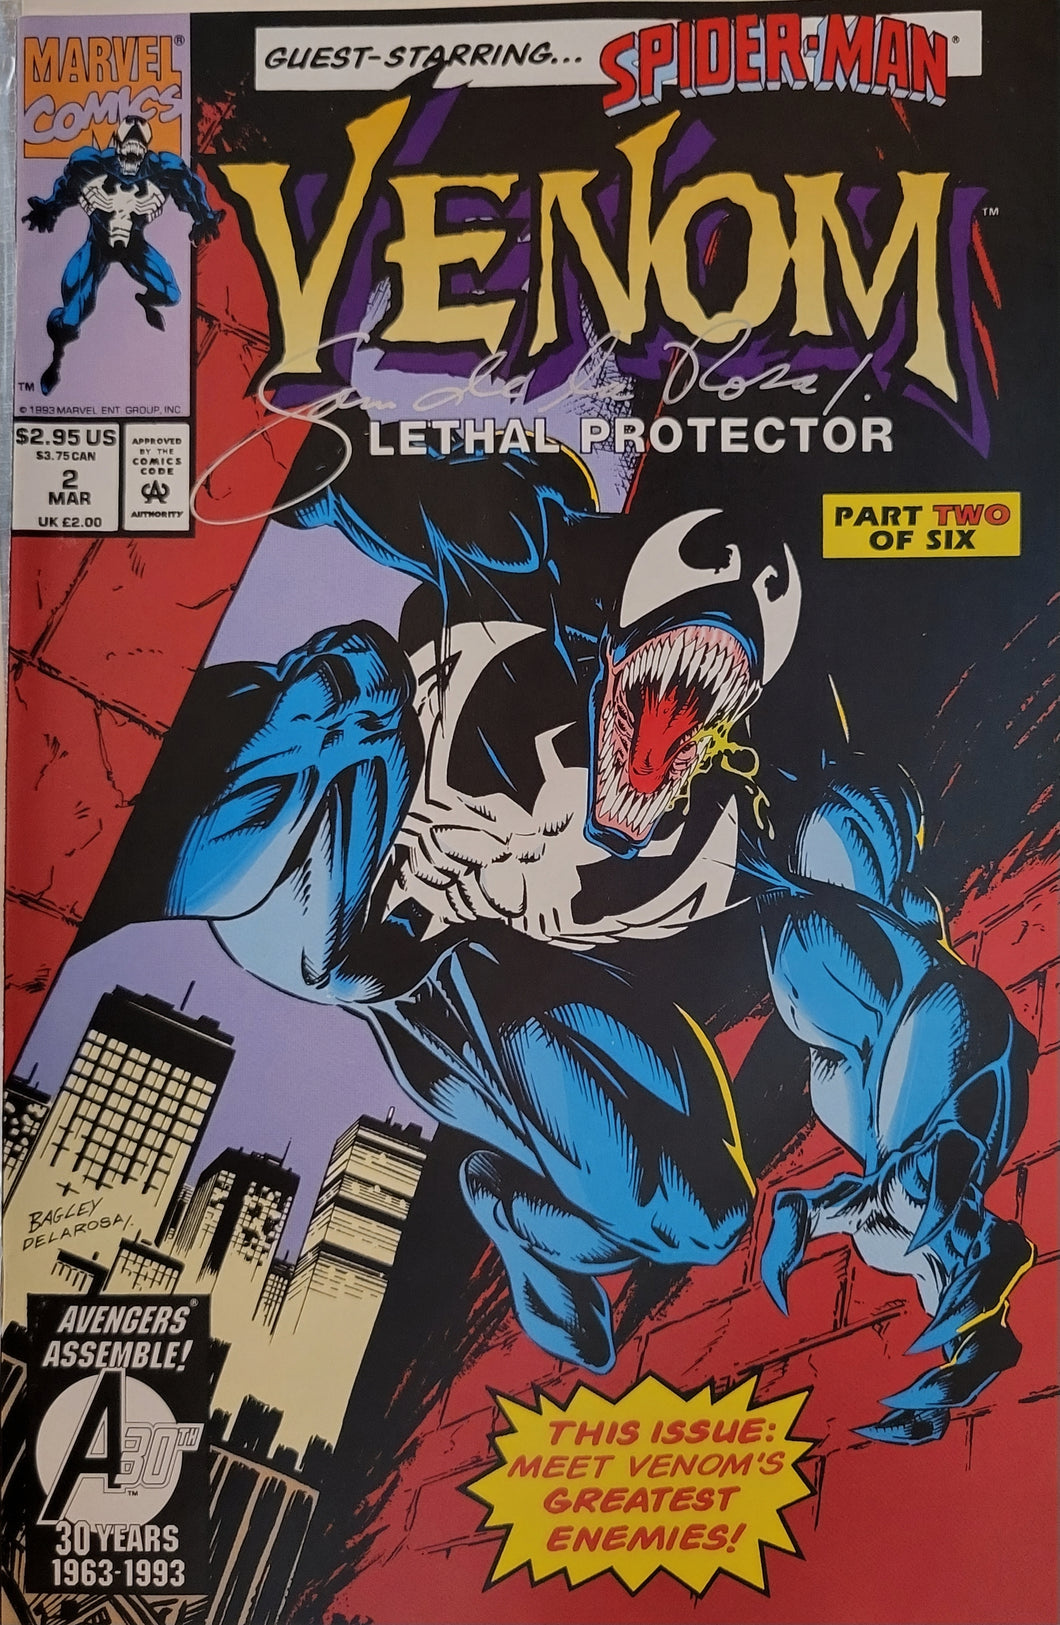 Venom Lethal Protector #2 Signed By Sam De La Rosa w/COA